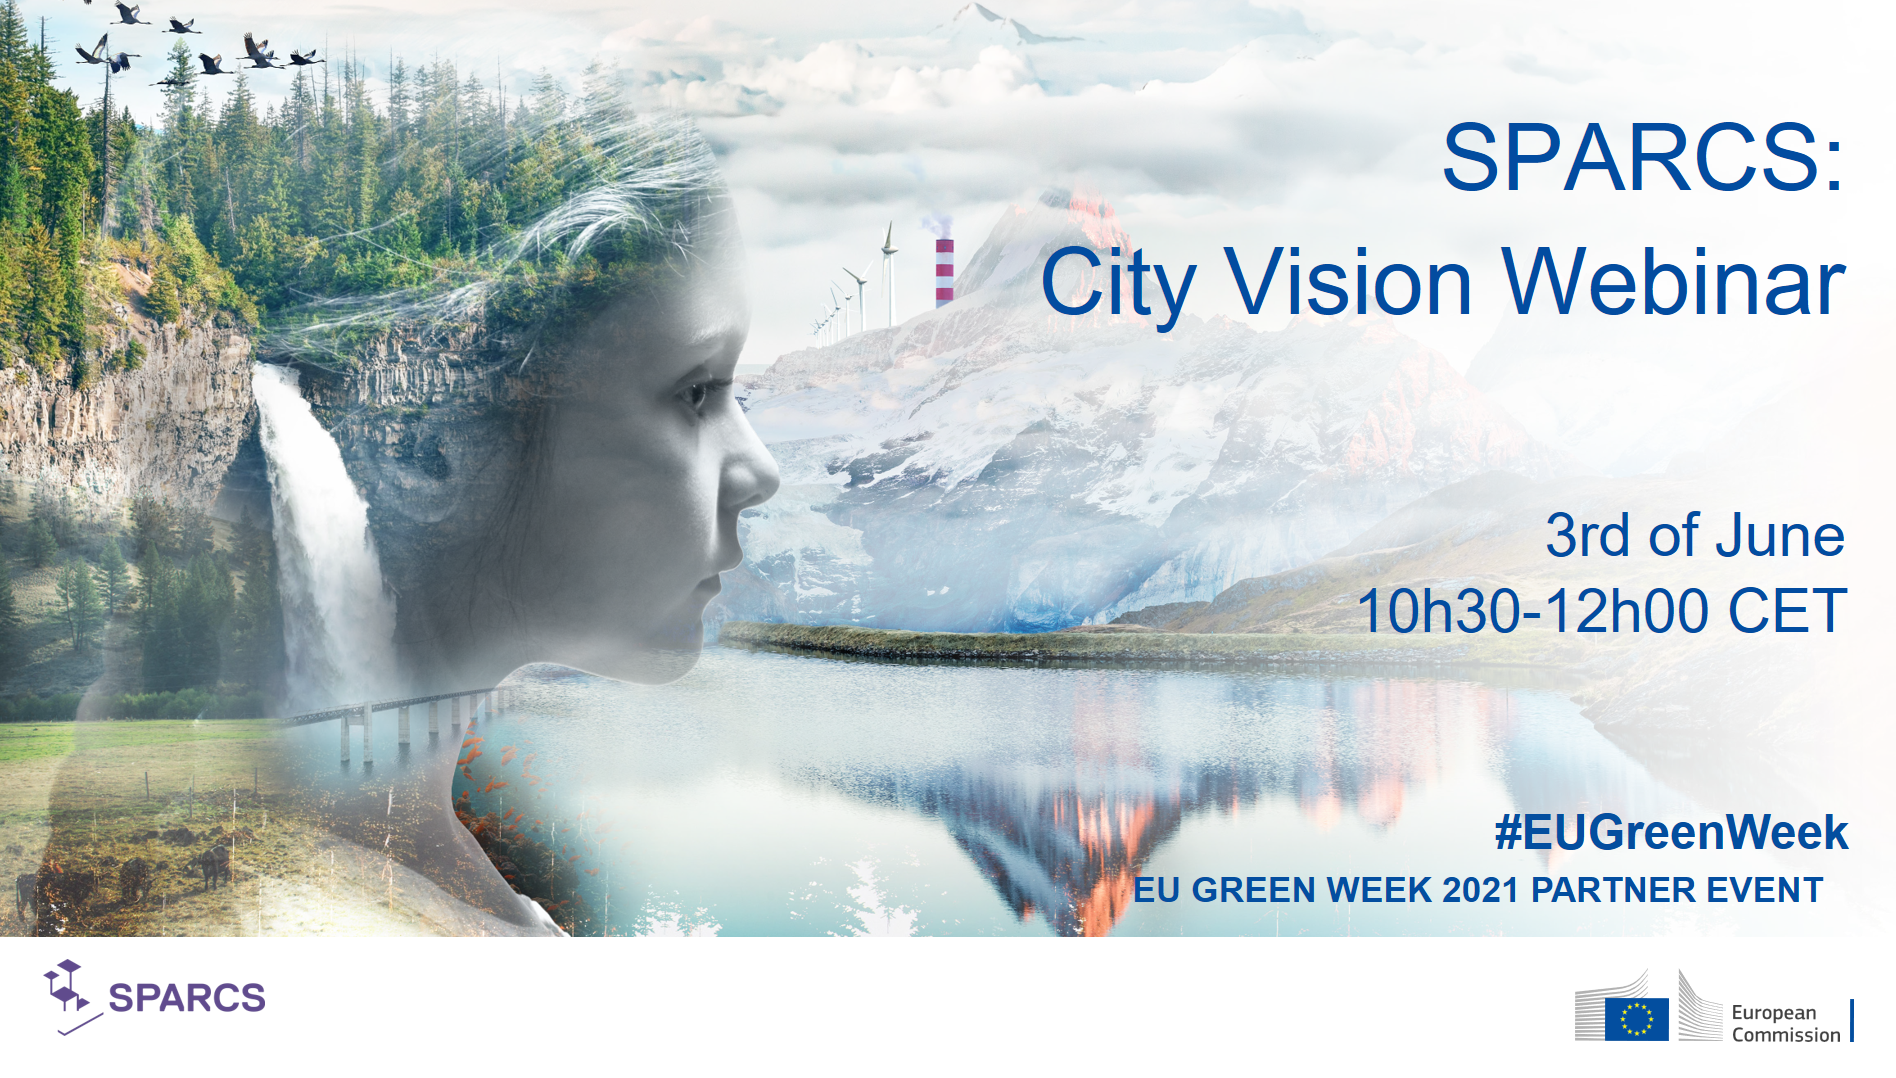 SPARCS: City Vision Webinar